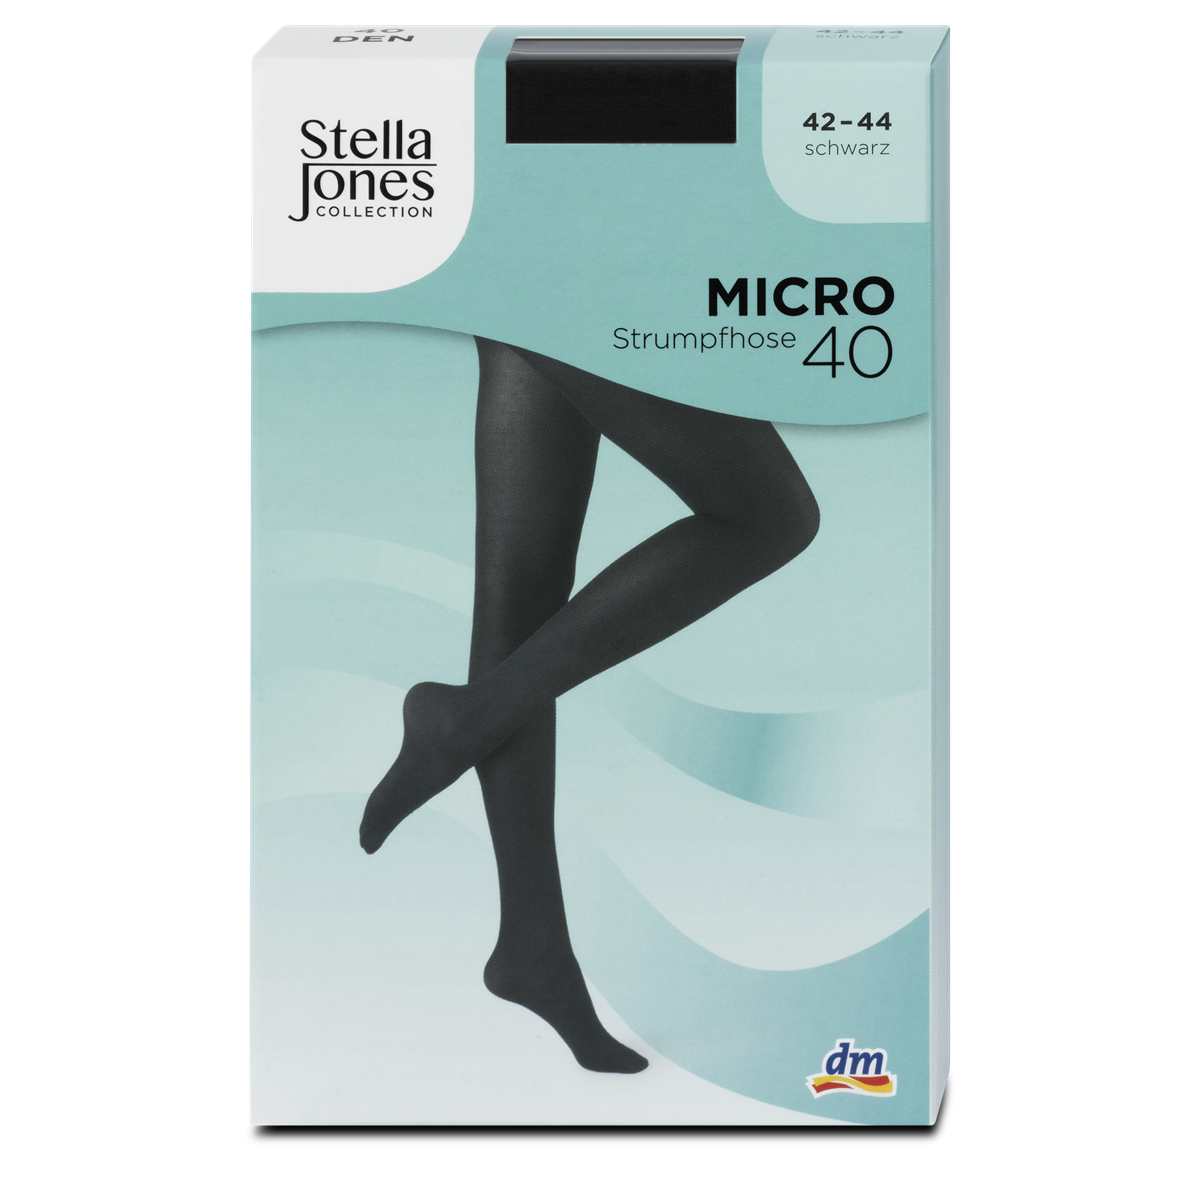 Stella Jones Micro Strumpfhose